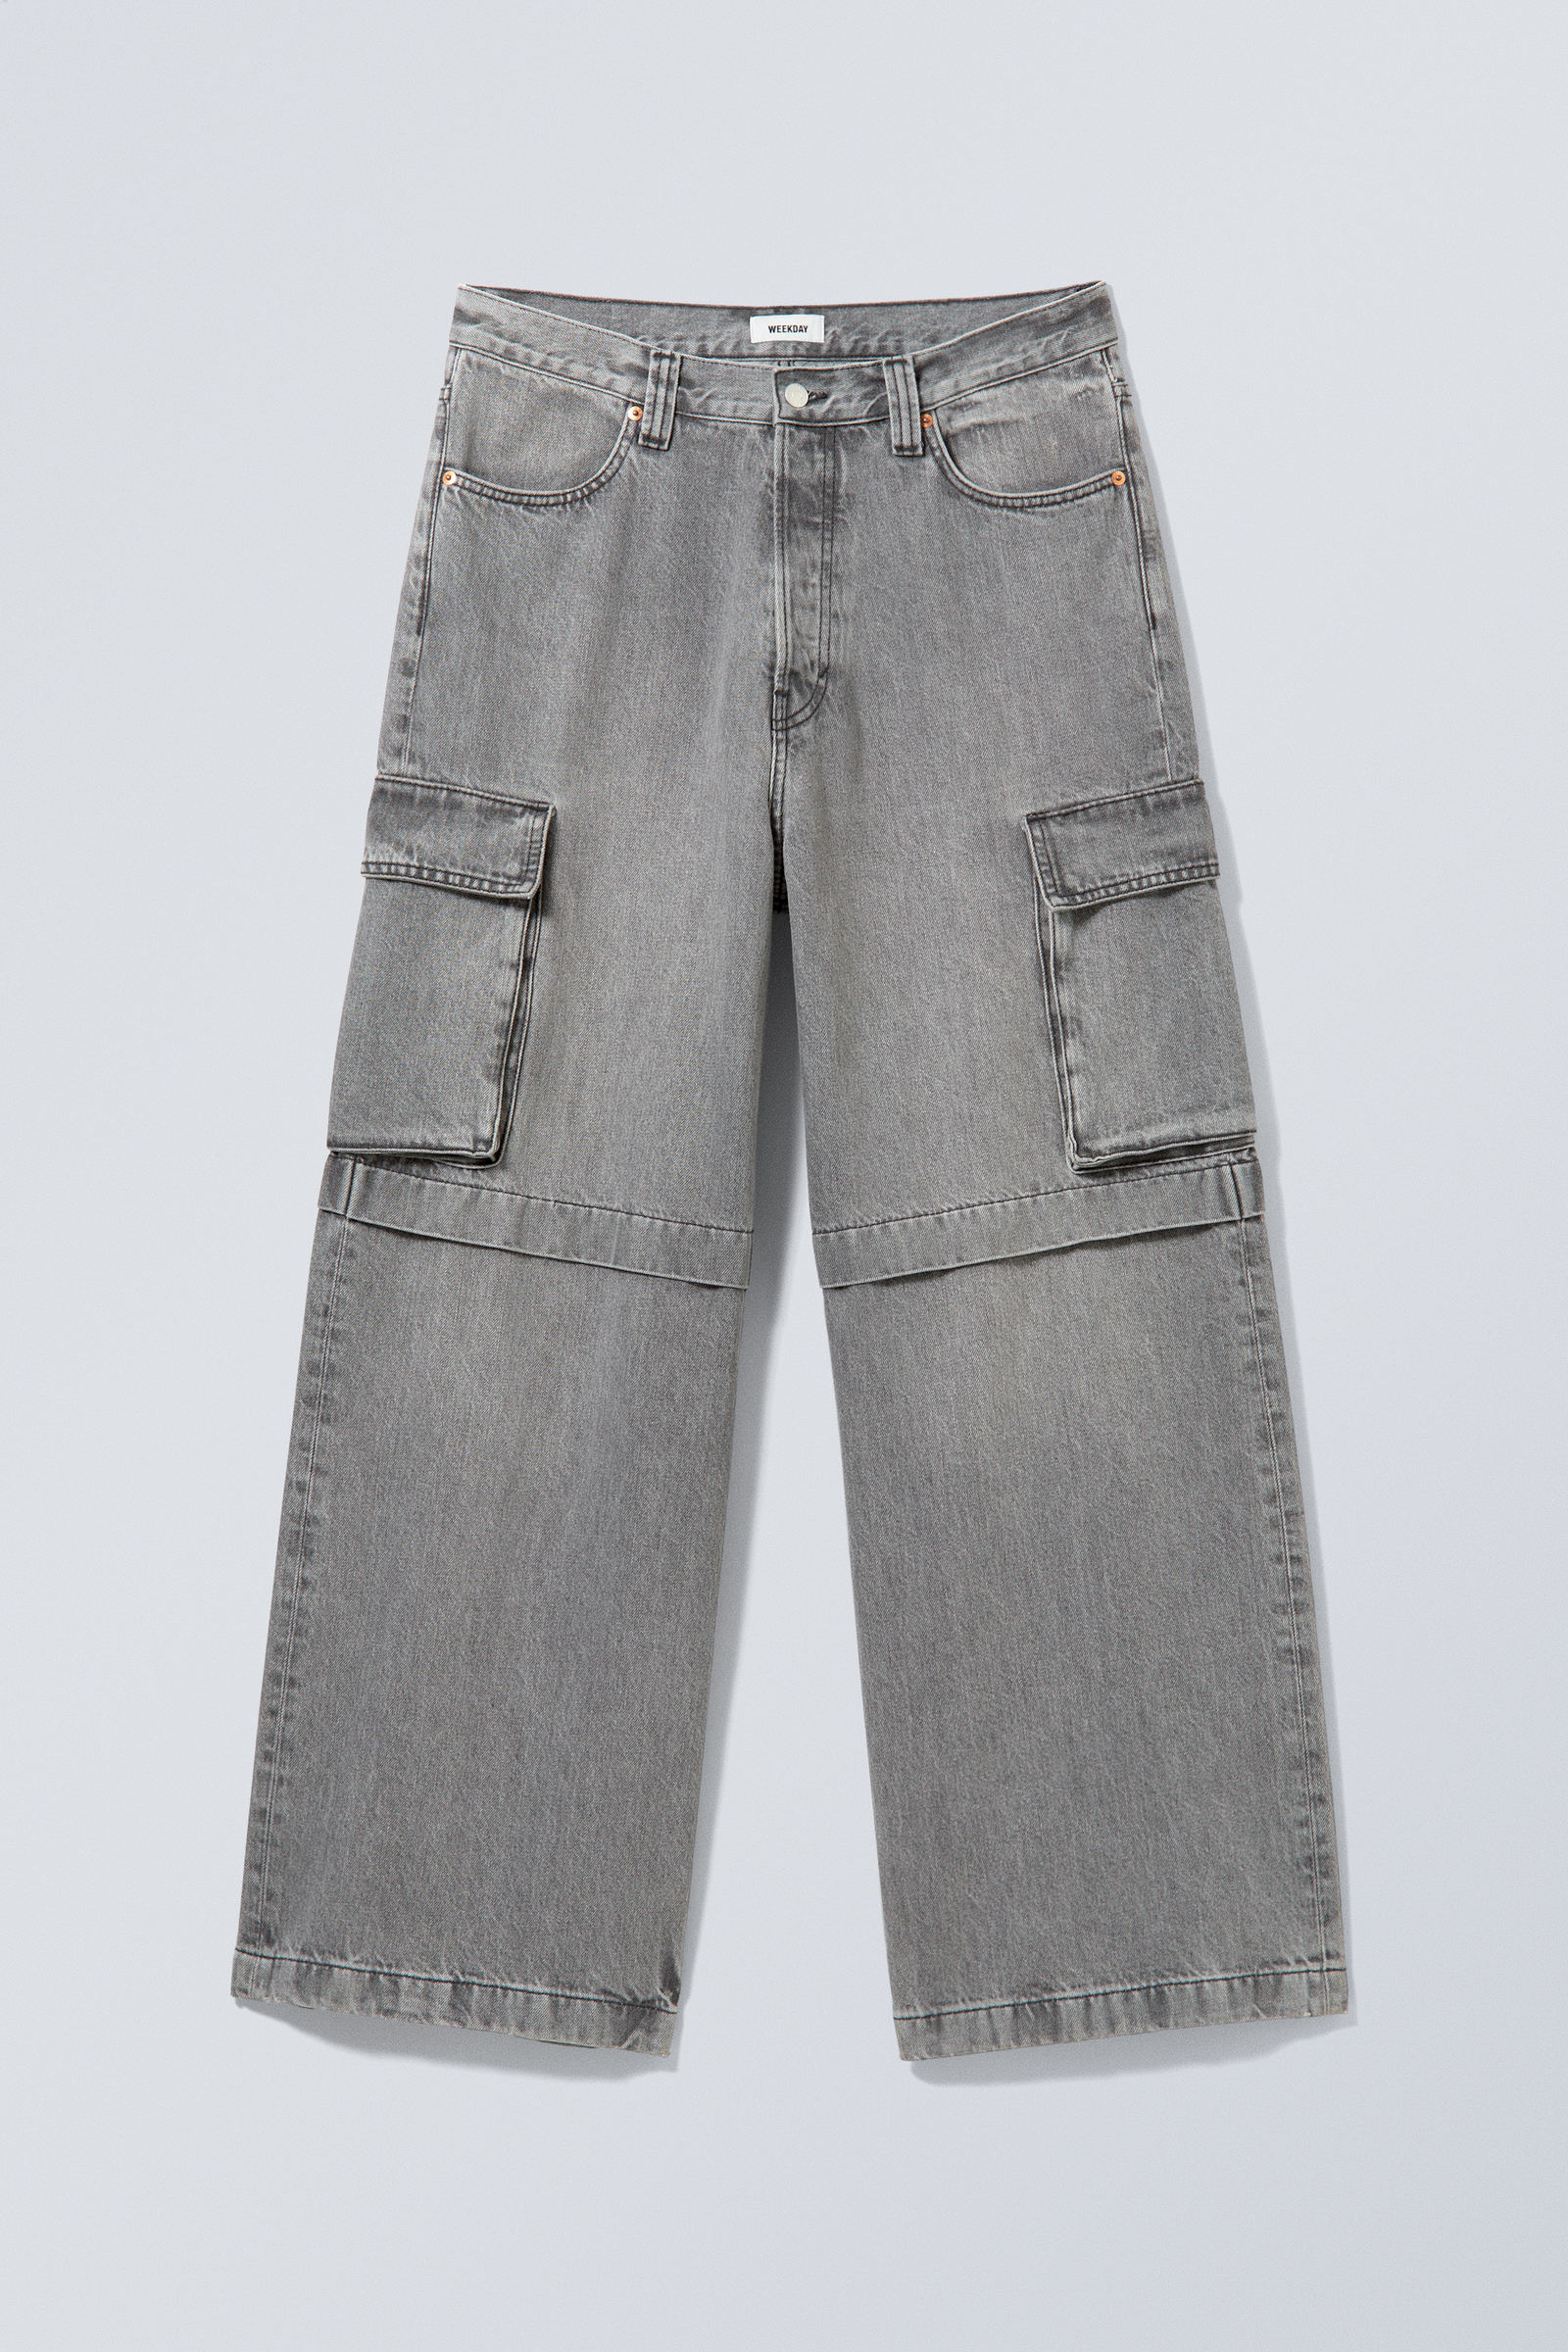 Eleven Grey - Pasadena Denim Baggy Cargo Jeans - 5